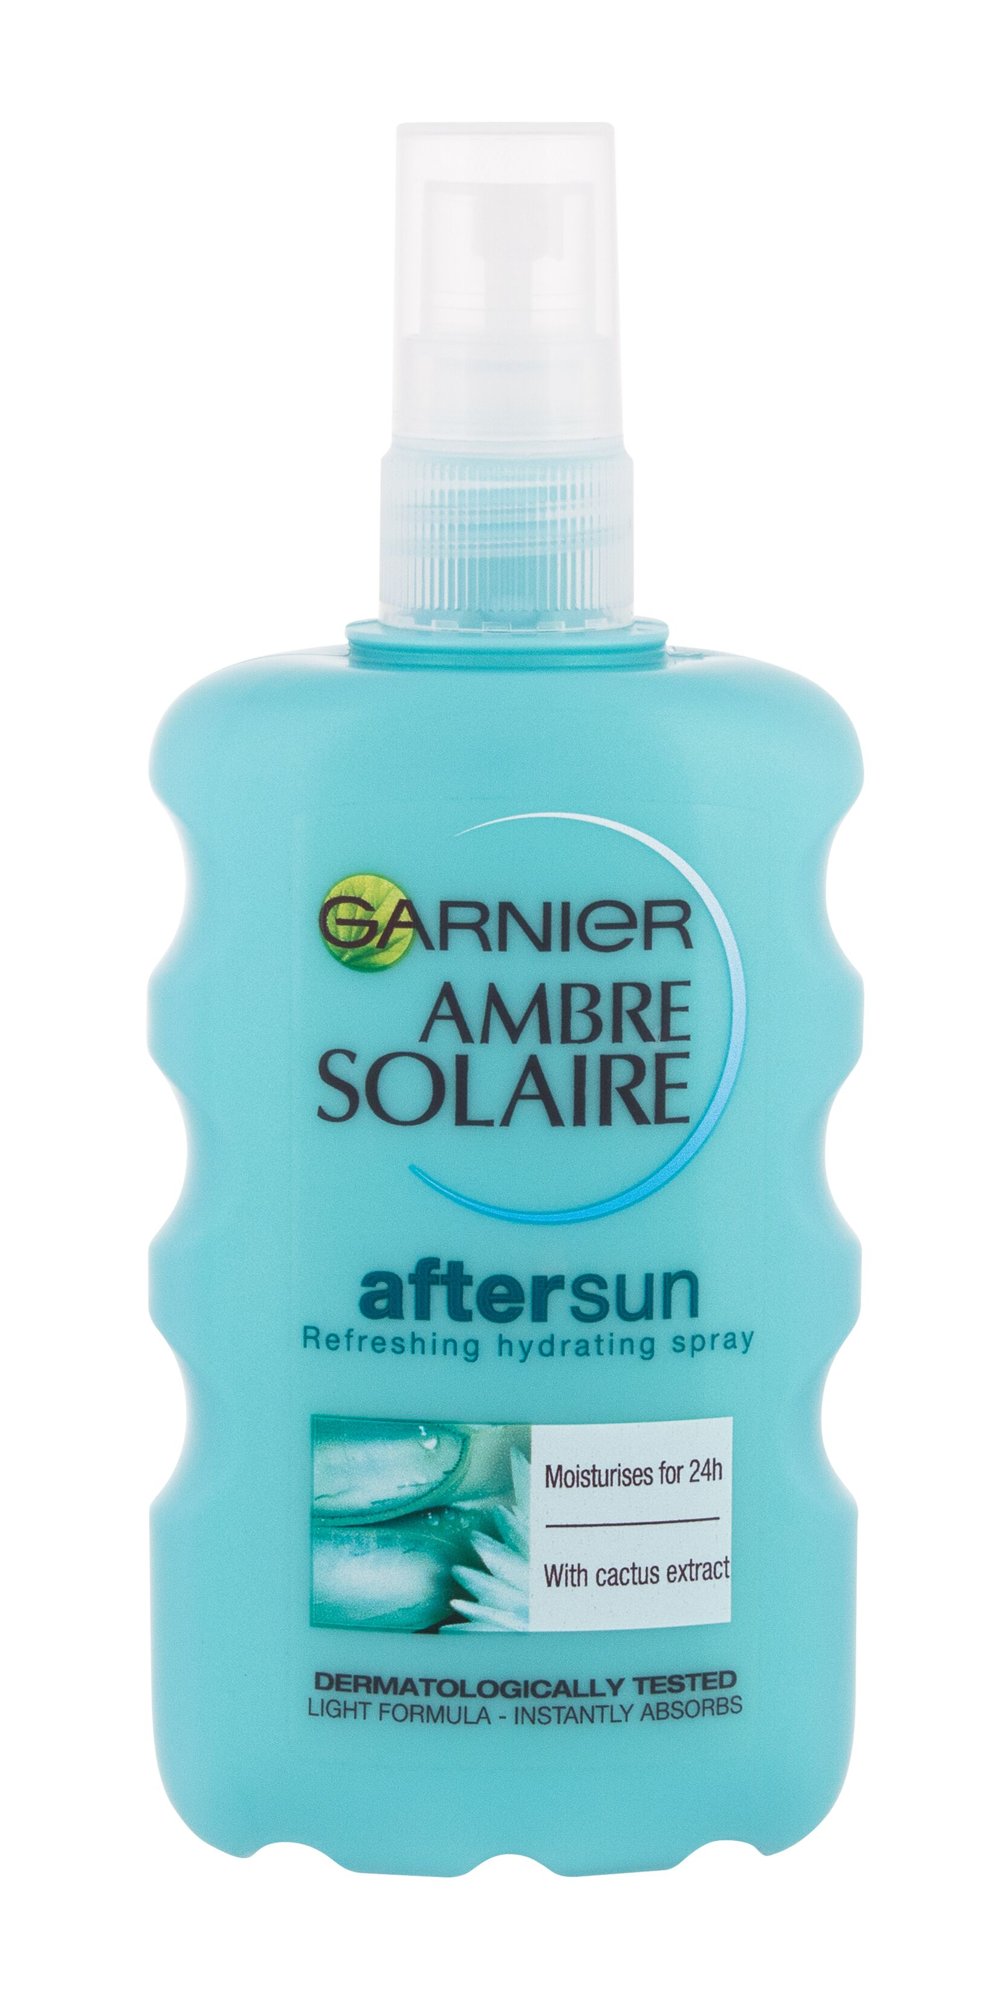 Garnier Ambre Solaire Aftersun 200ml priemonė po deginimosi